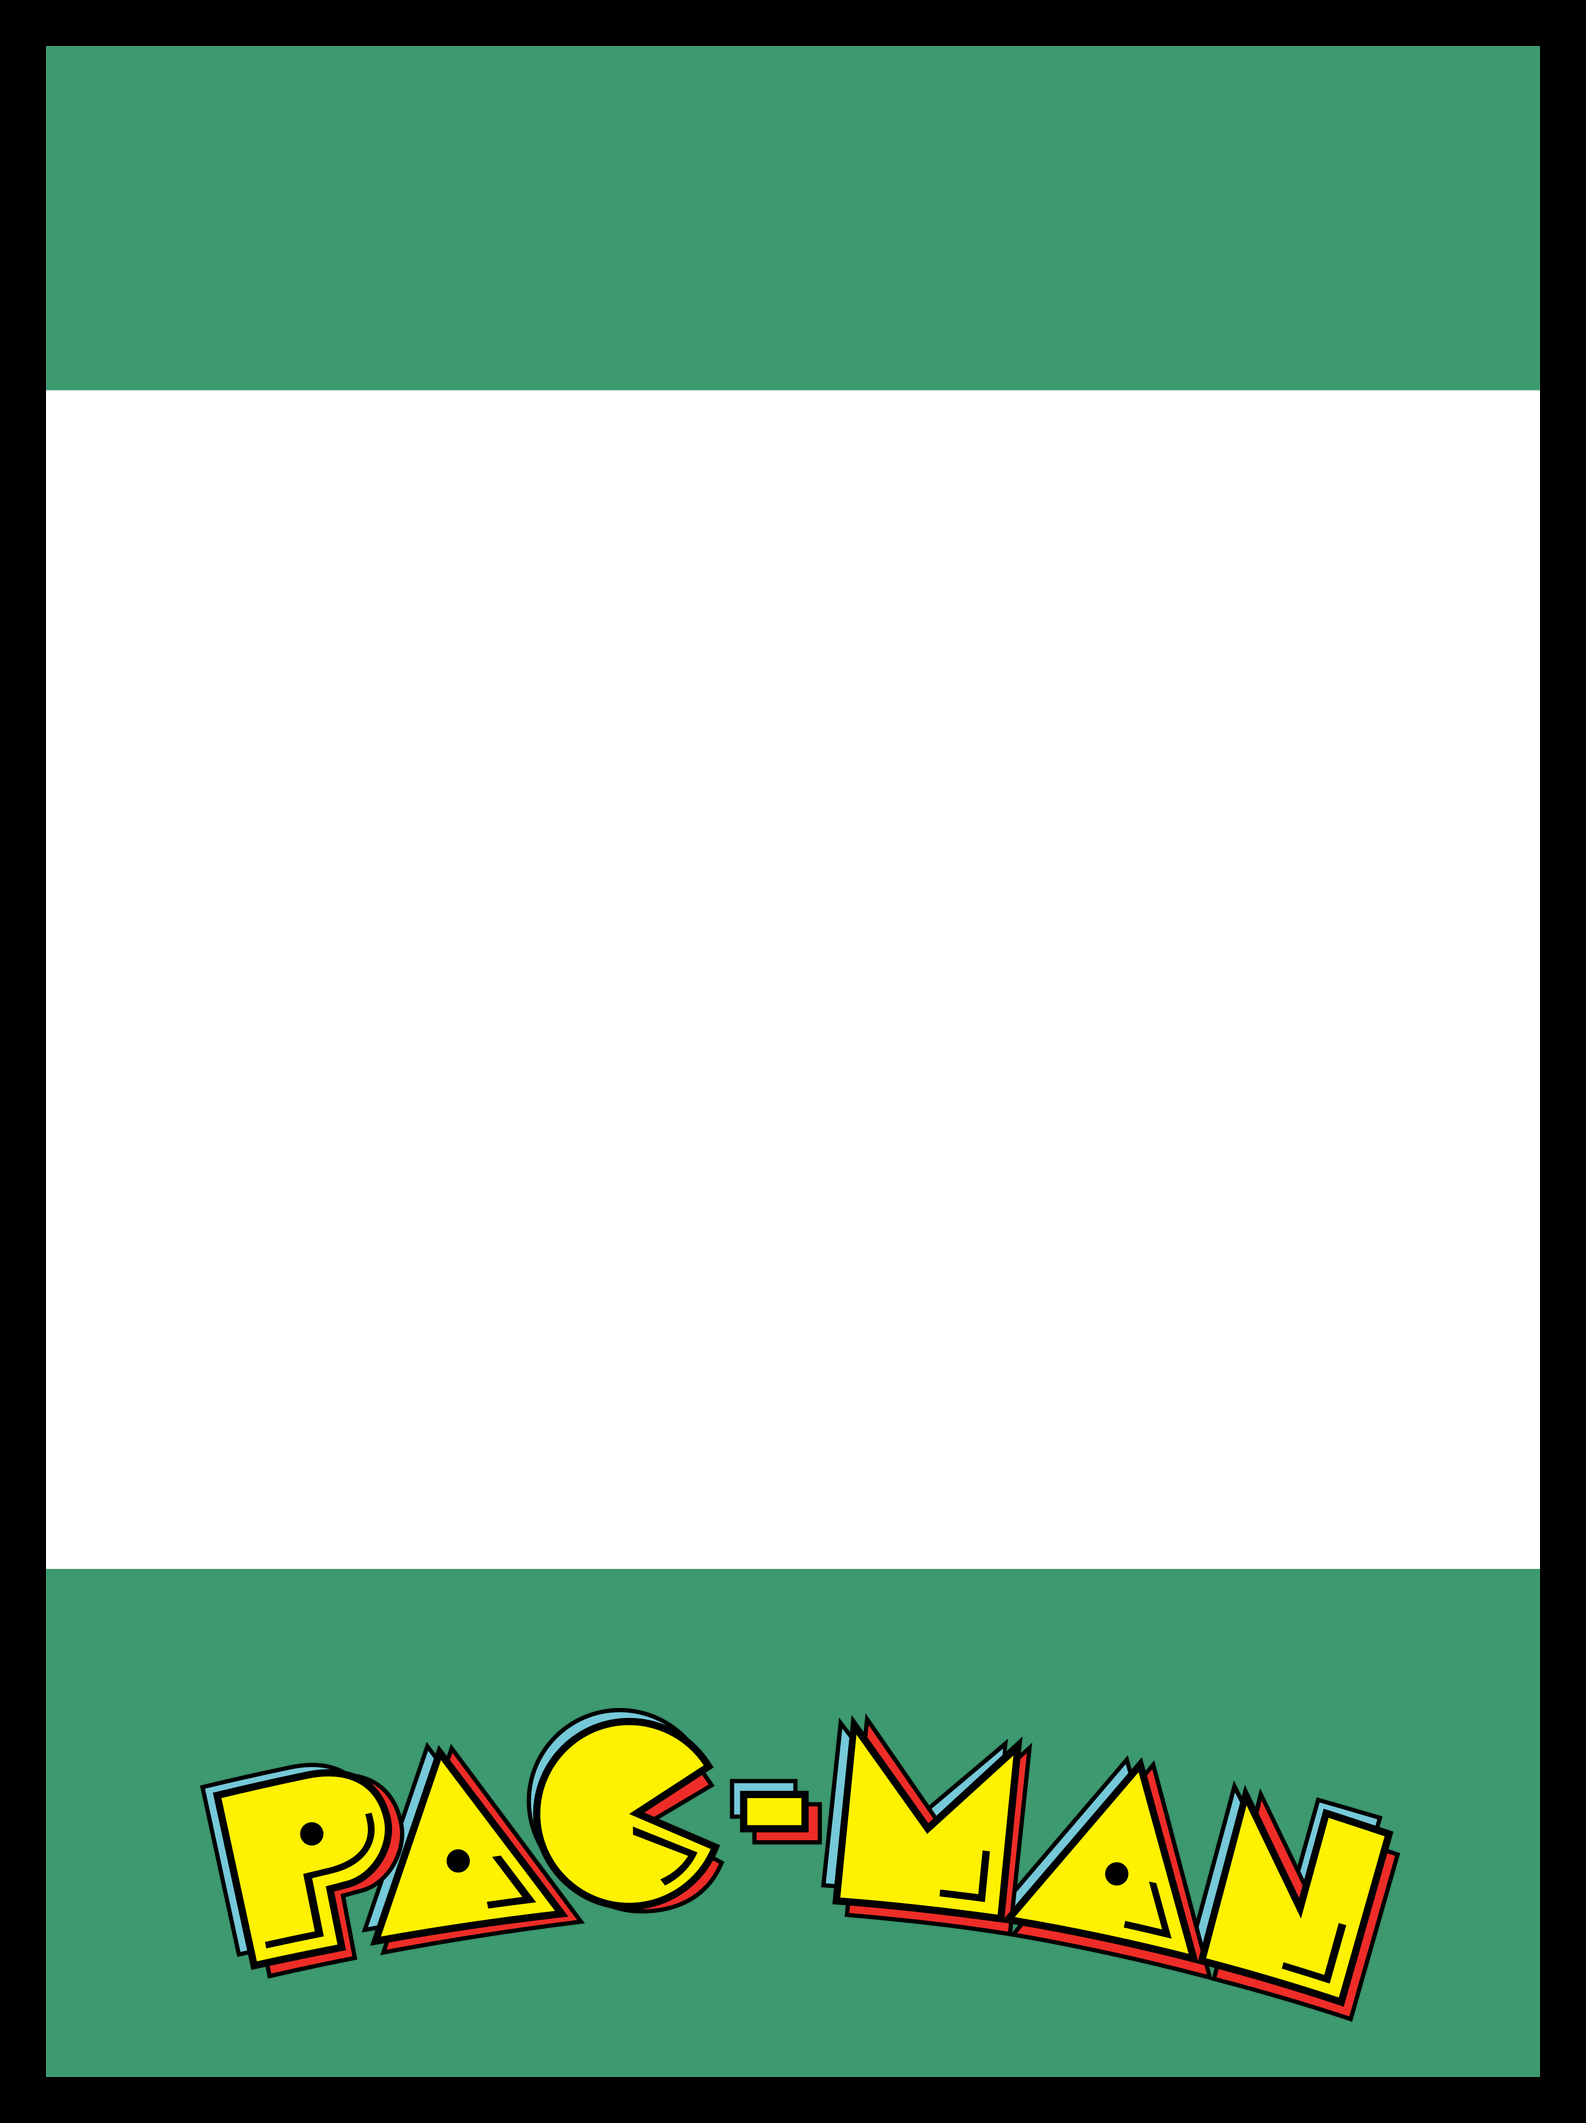 Pac-man oc character card Blank Meme Template